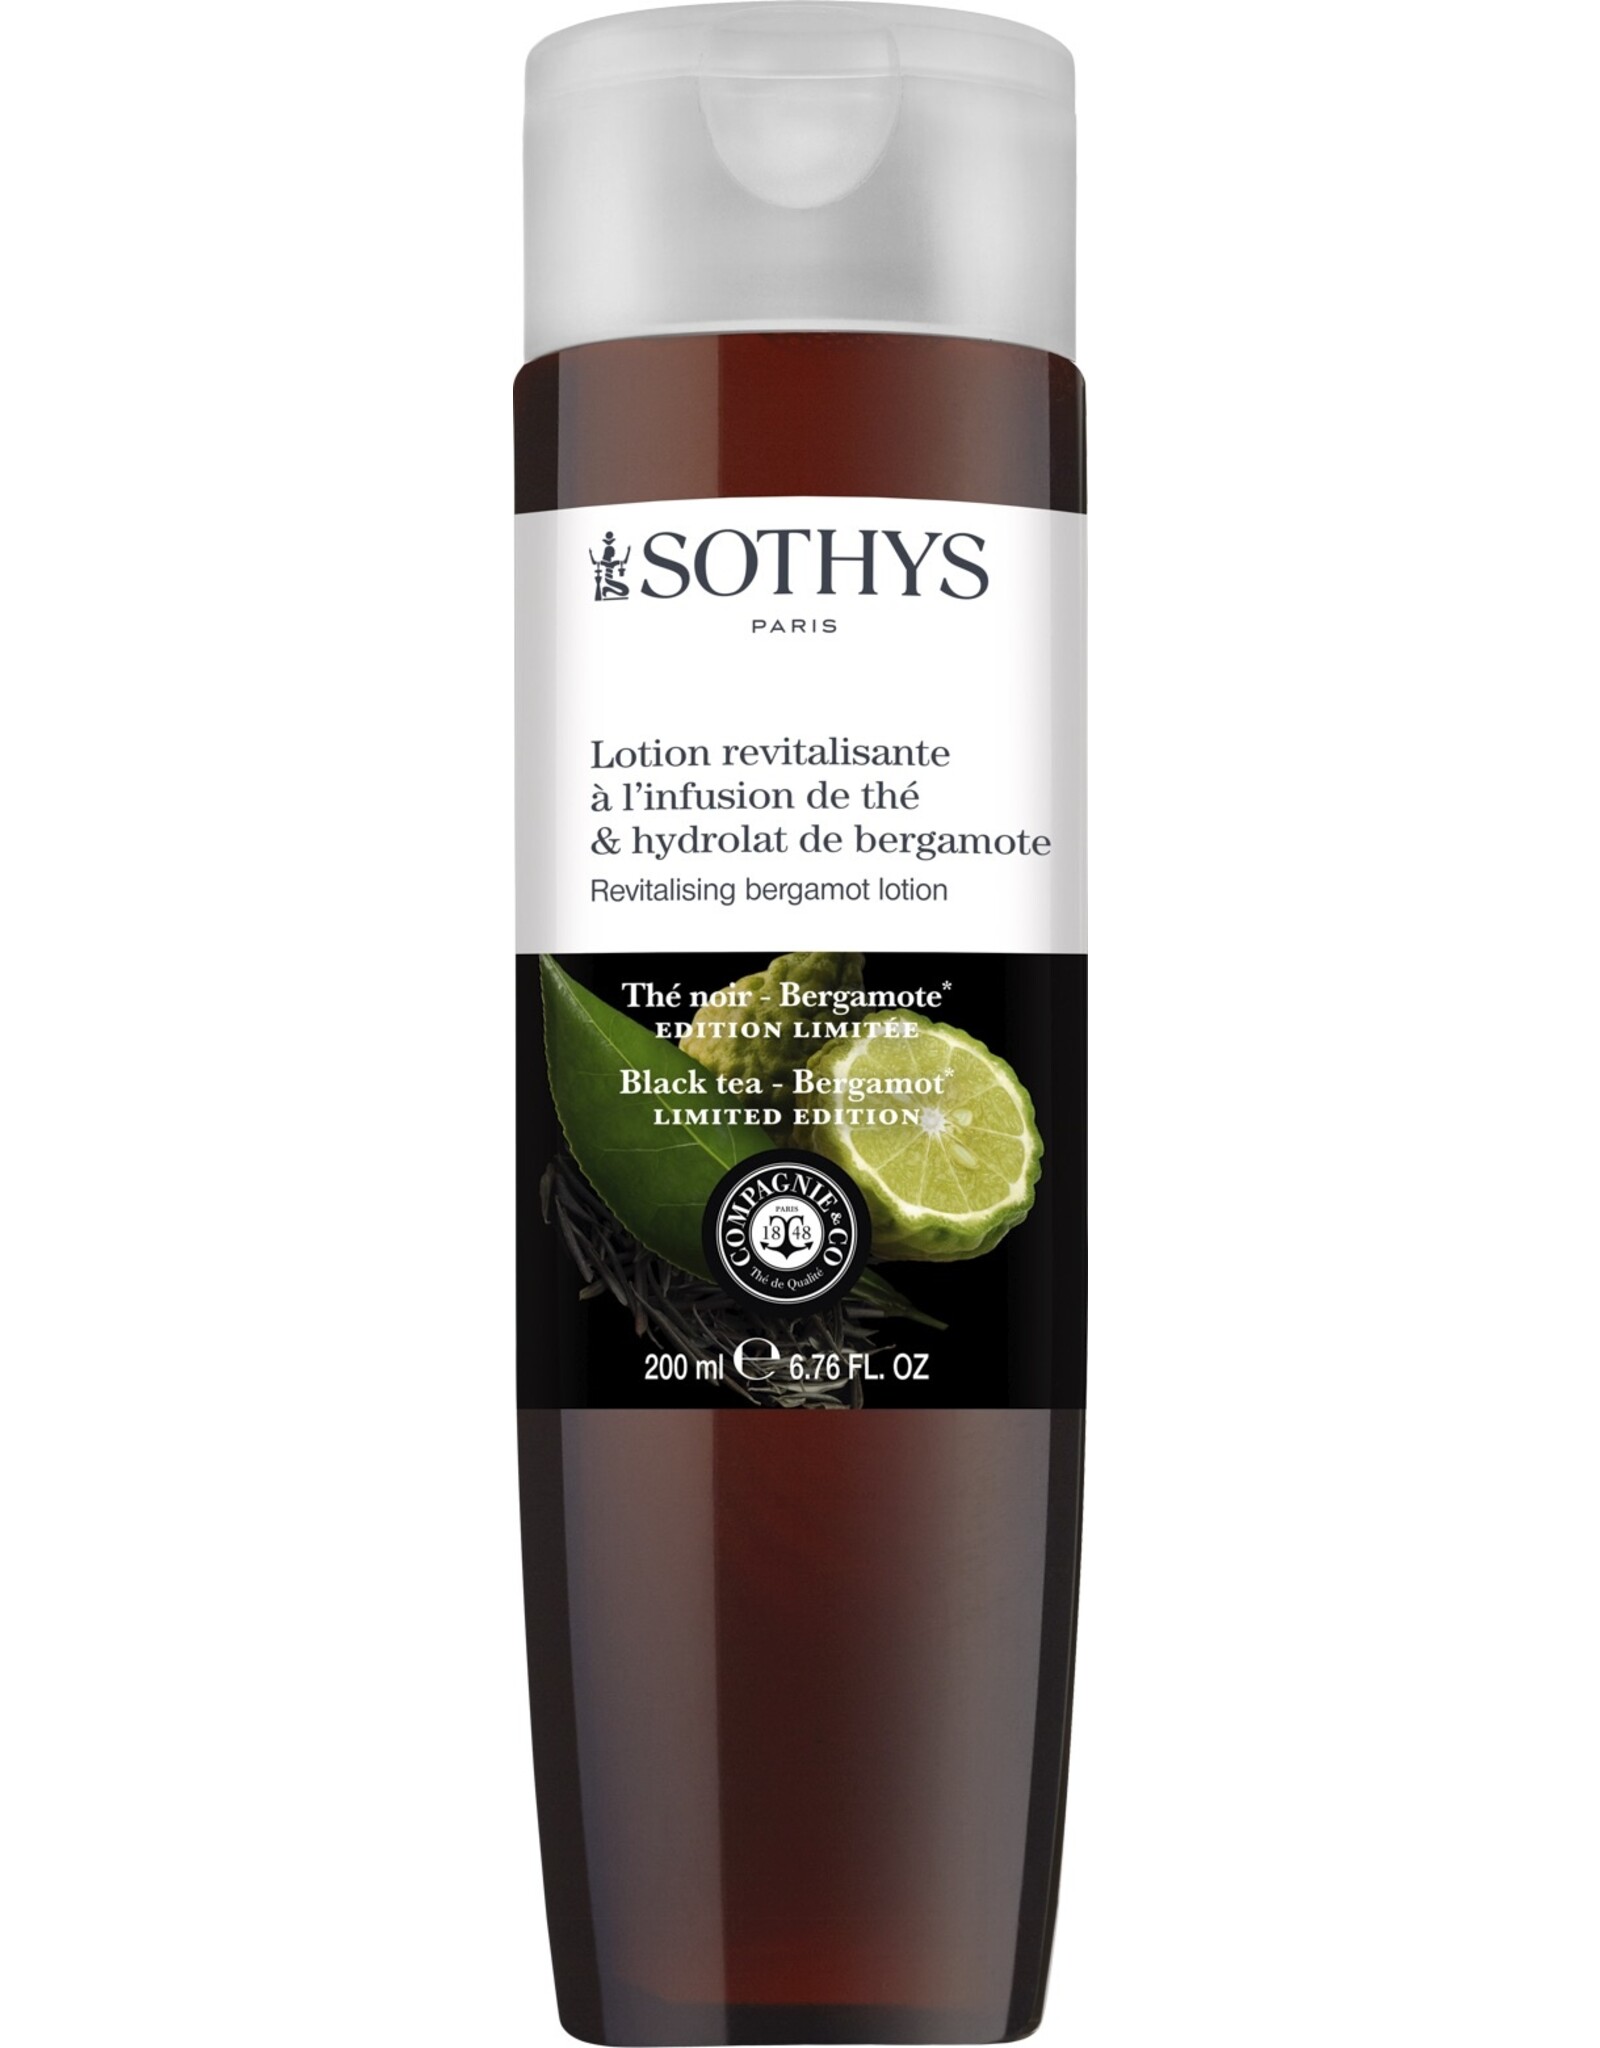 SOTHYS Lotion revitalisante - Thé noir & Bergamote - Sothys